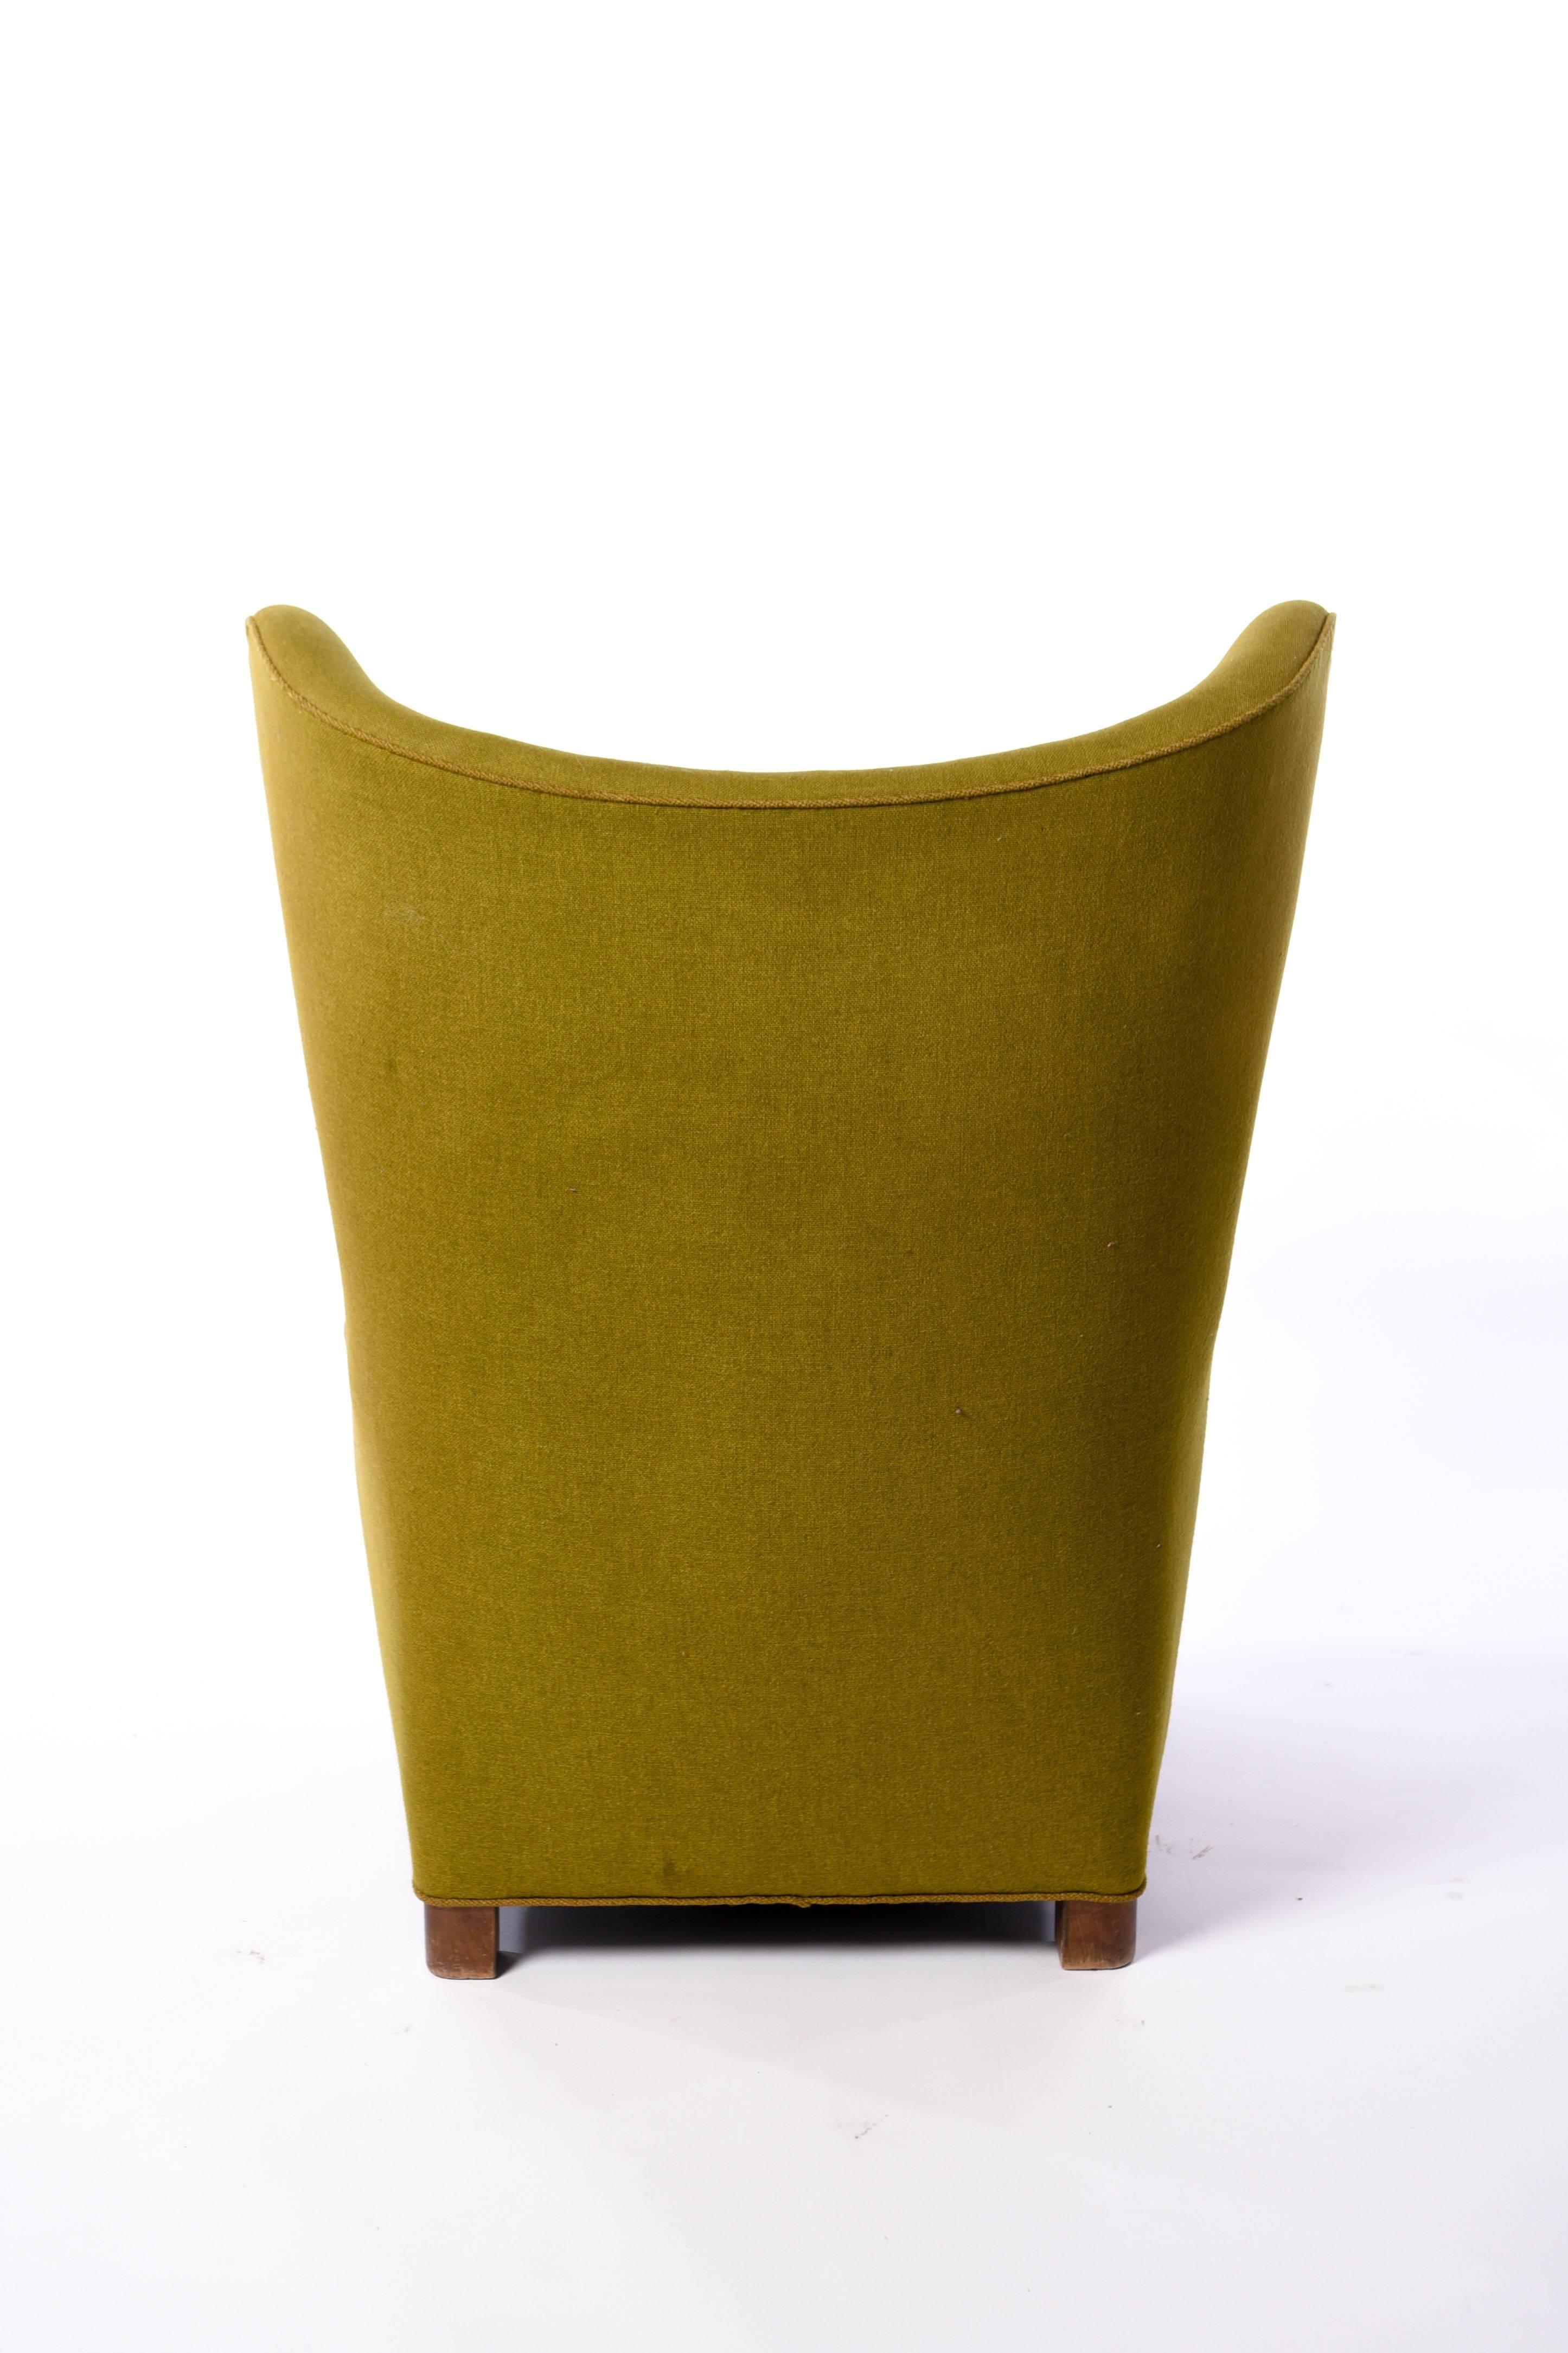 Danish 1942 Fritz Hansen Model 1672 Wing Back Chair in Original Green Wool Fabric